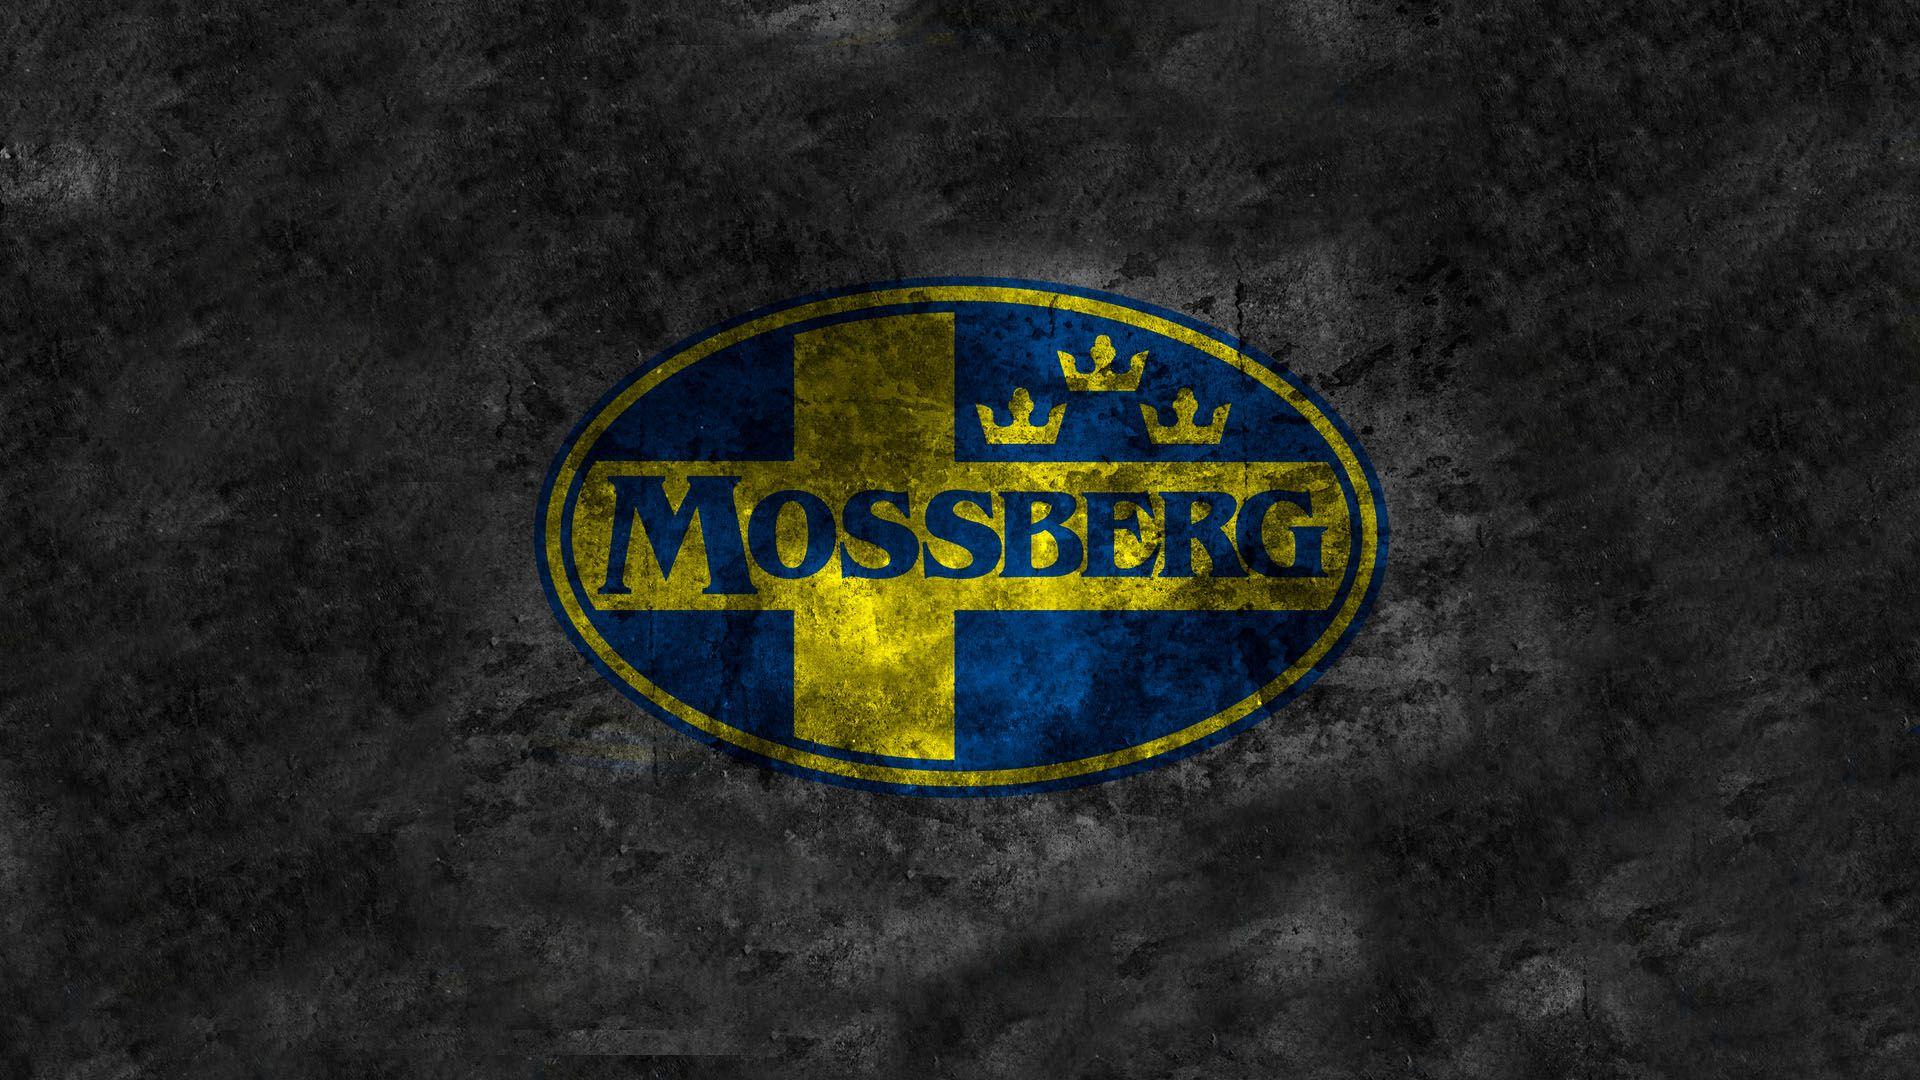 Mossberg Logo - Mossberg Logos